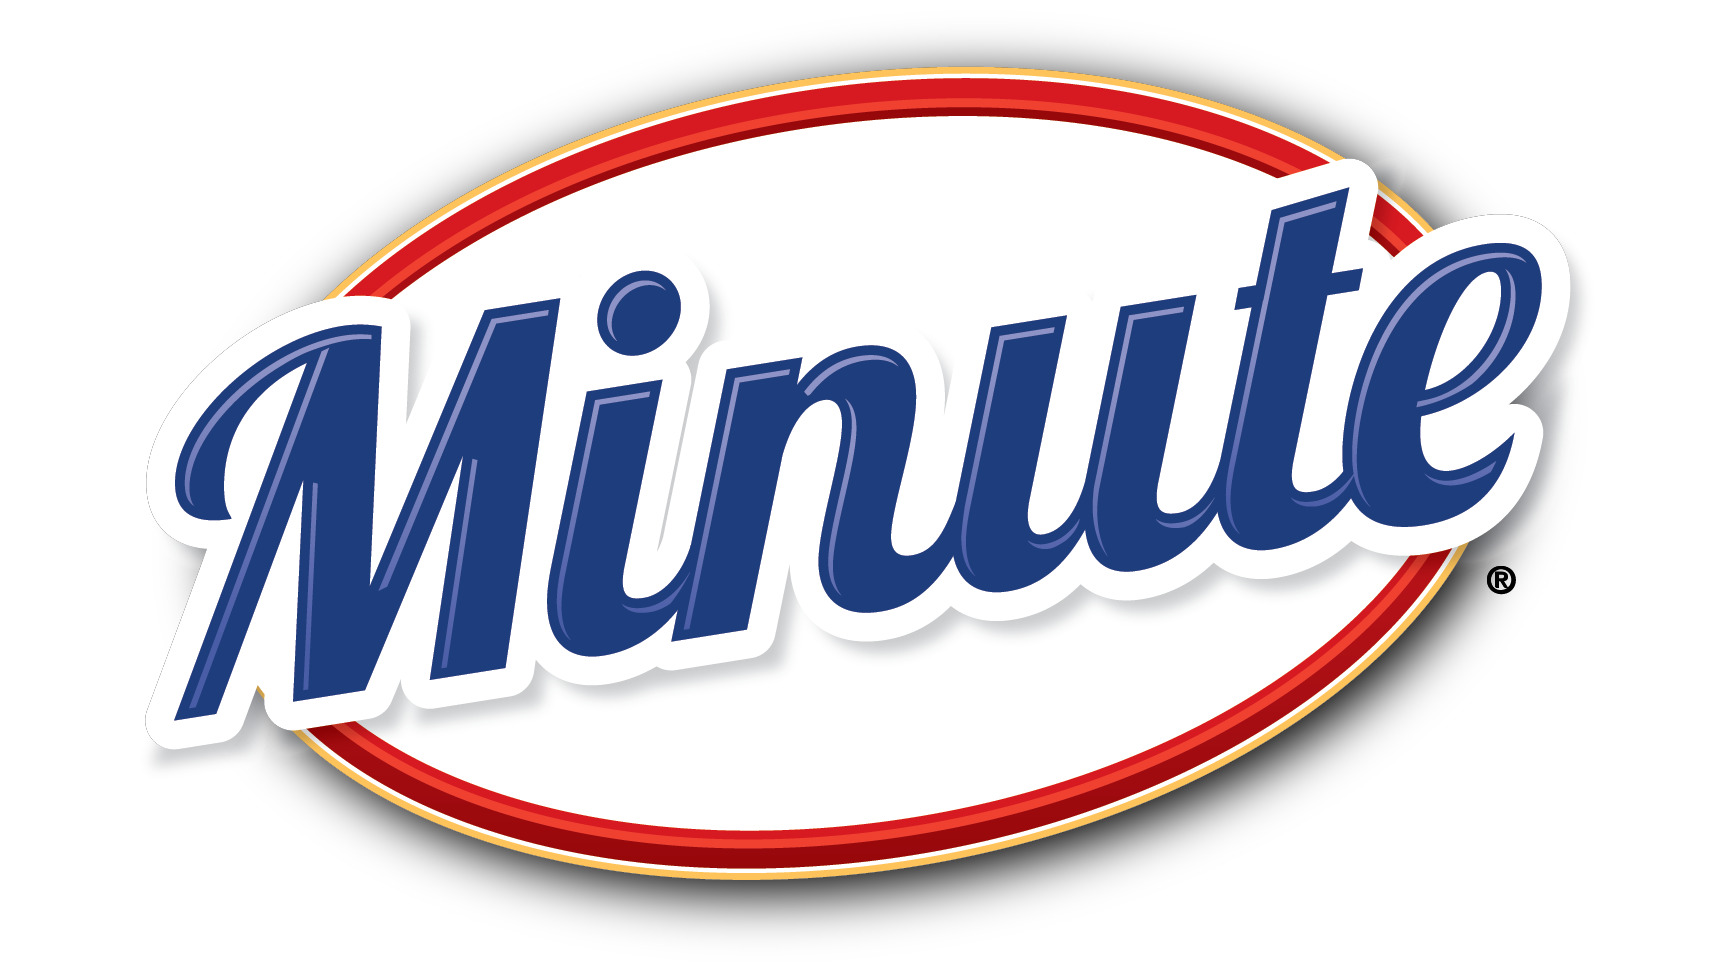 Minute Rice logo